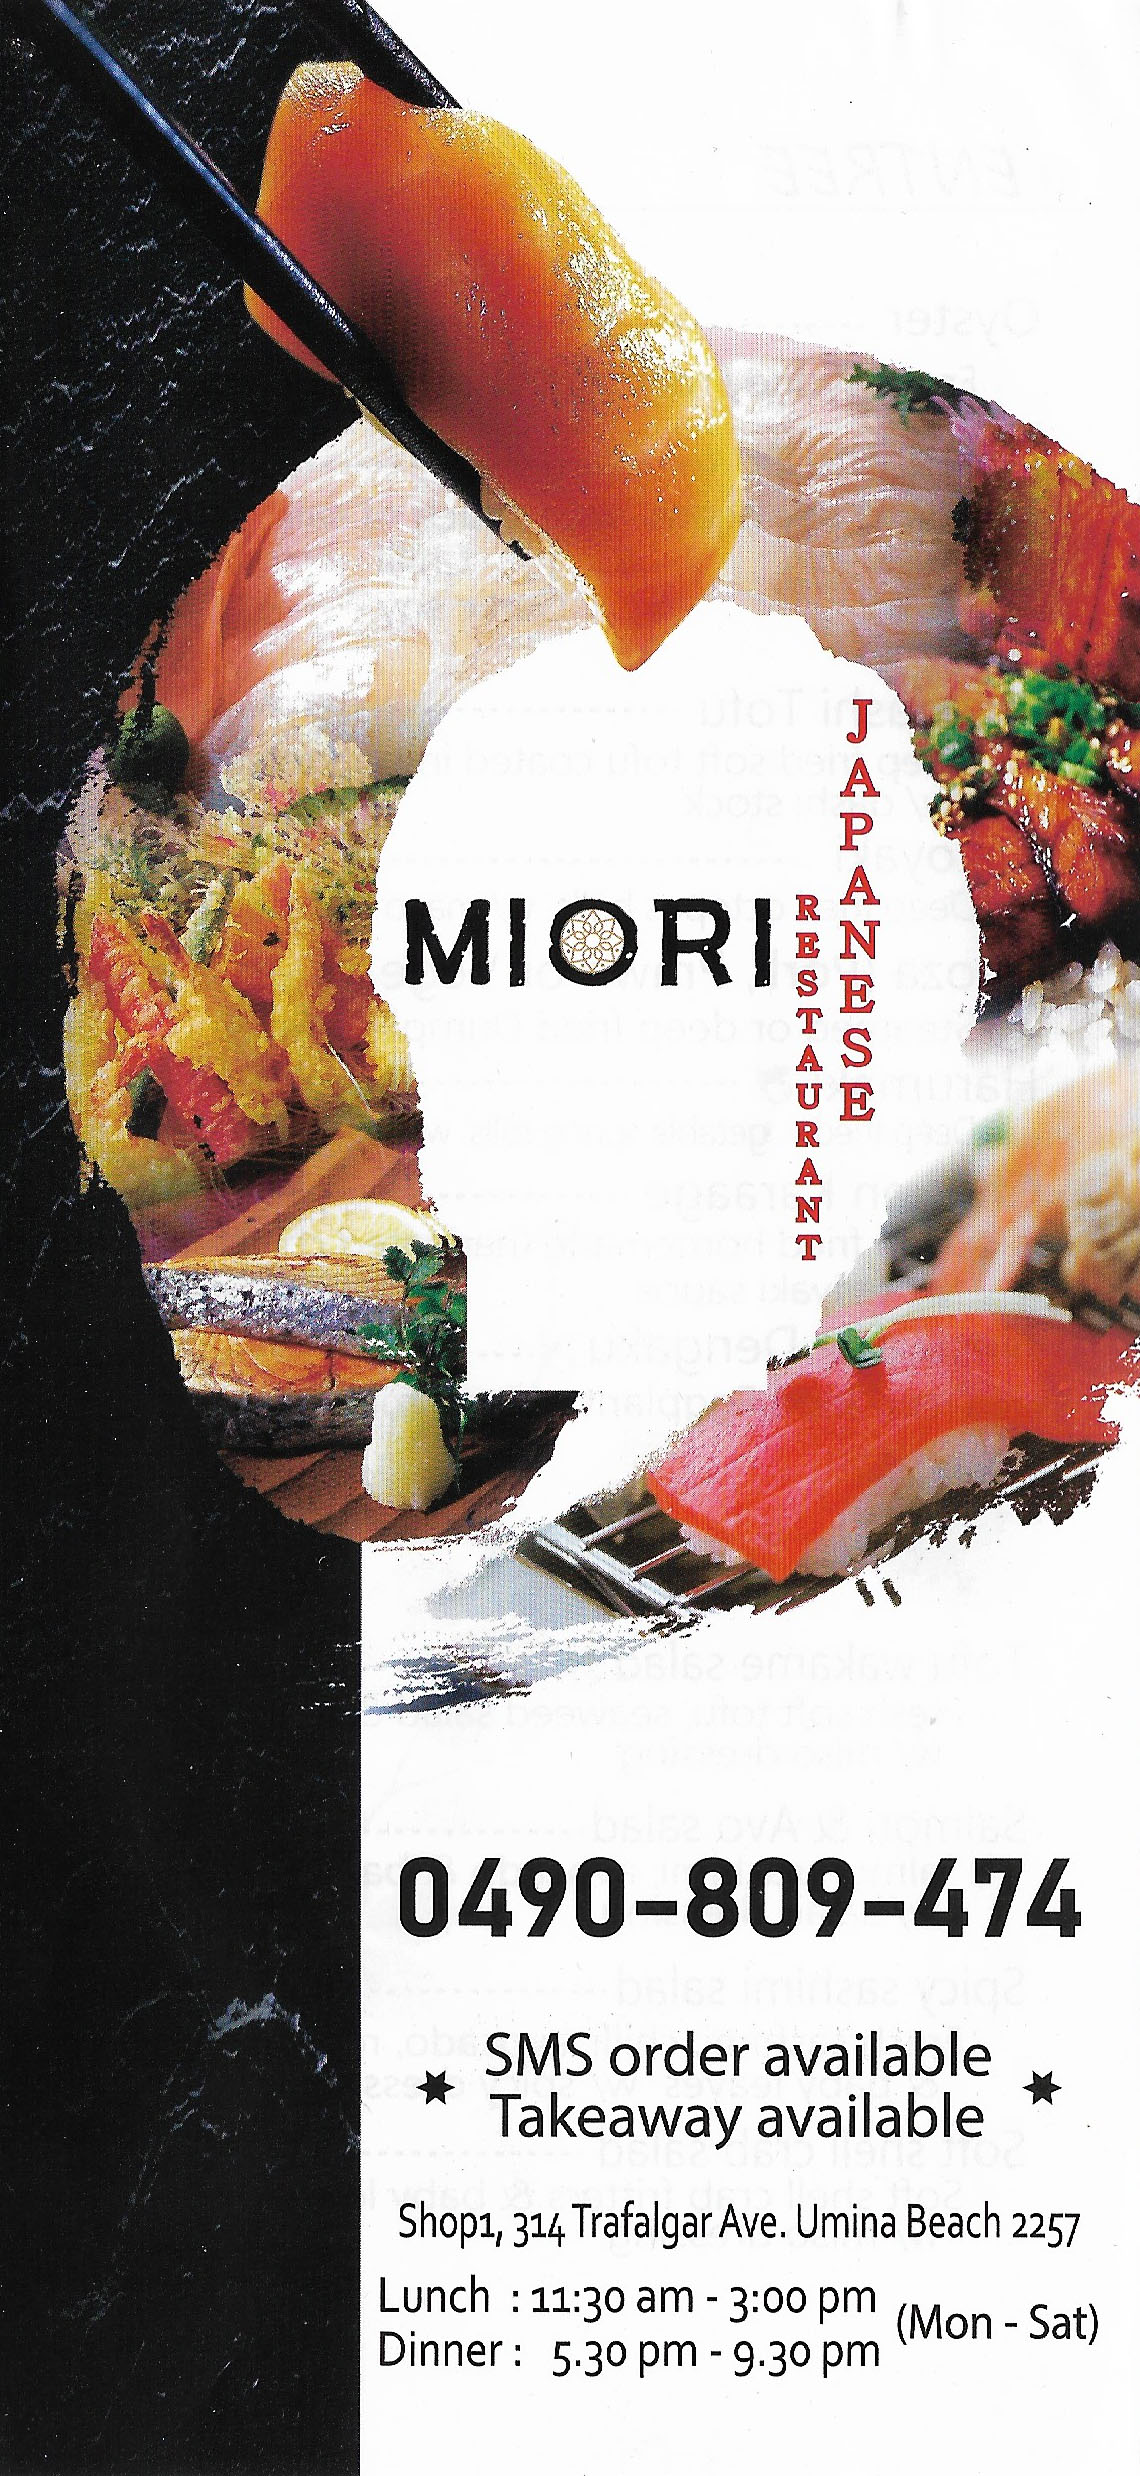 Miori Japanese Restaurant Umina Beach Central Coast - NSW | OBZ Online Business Zone